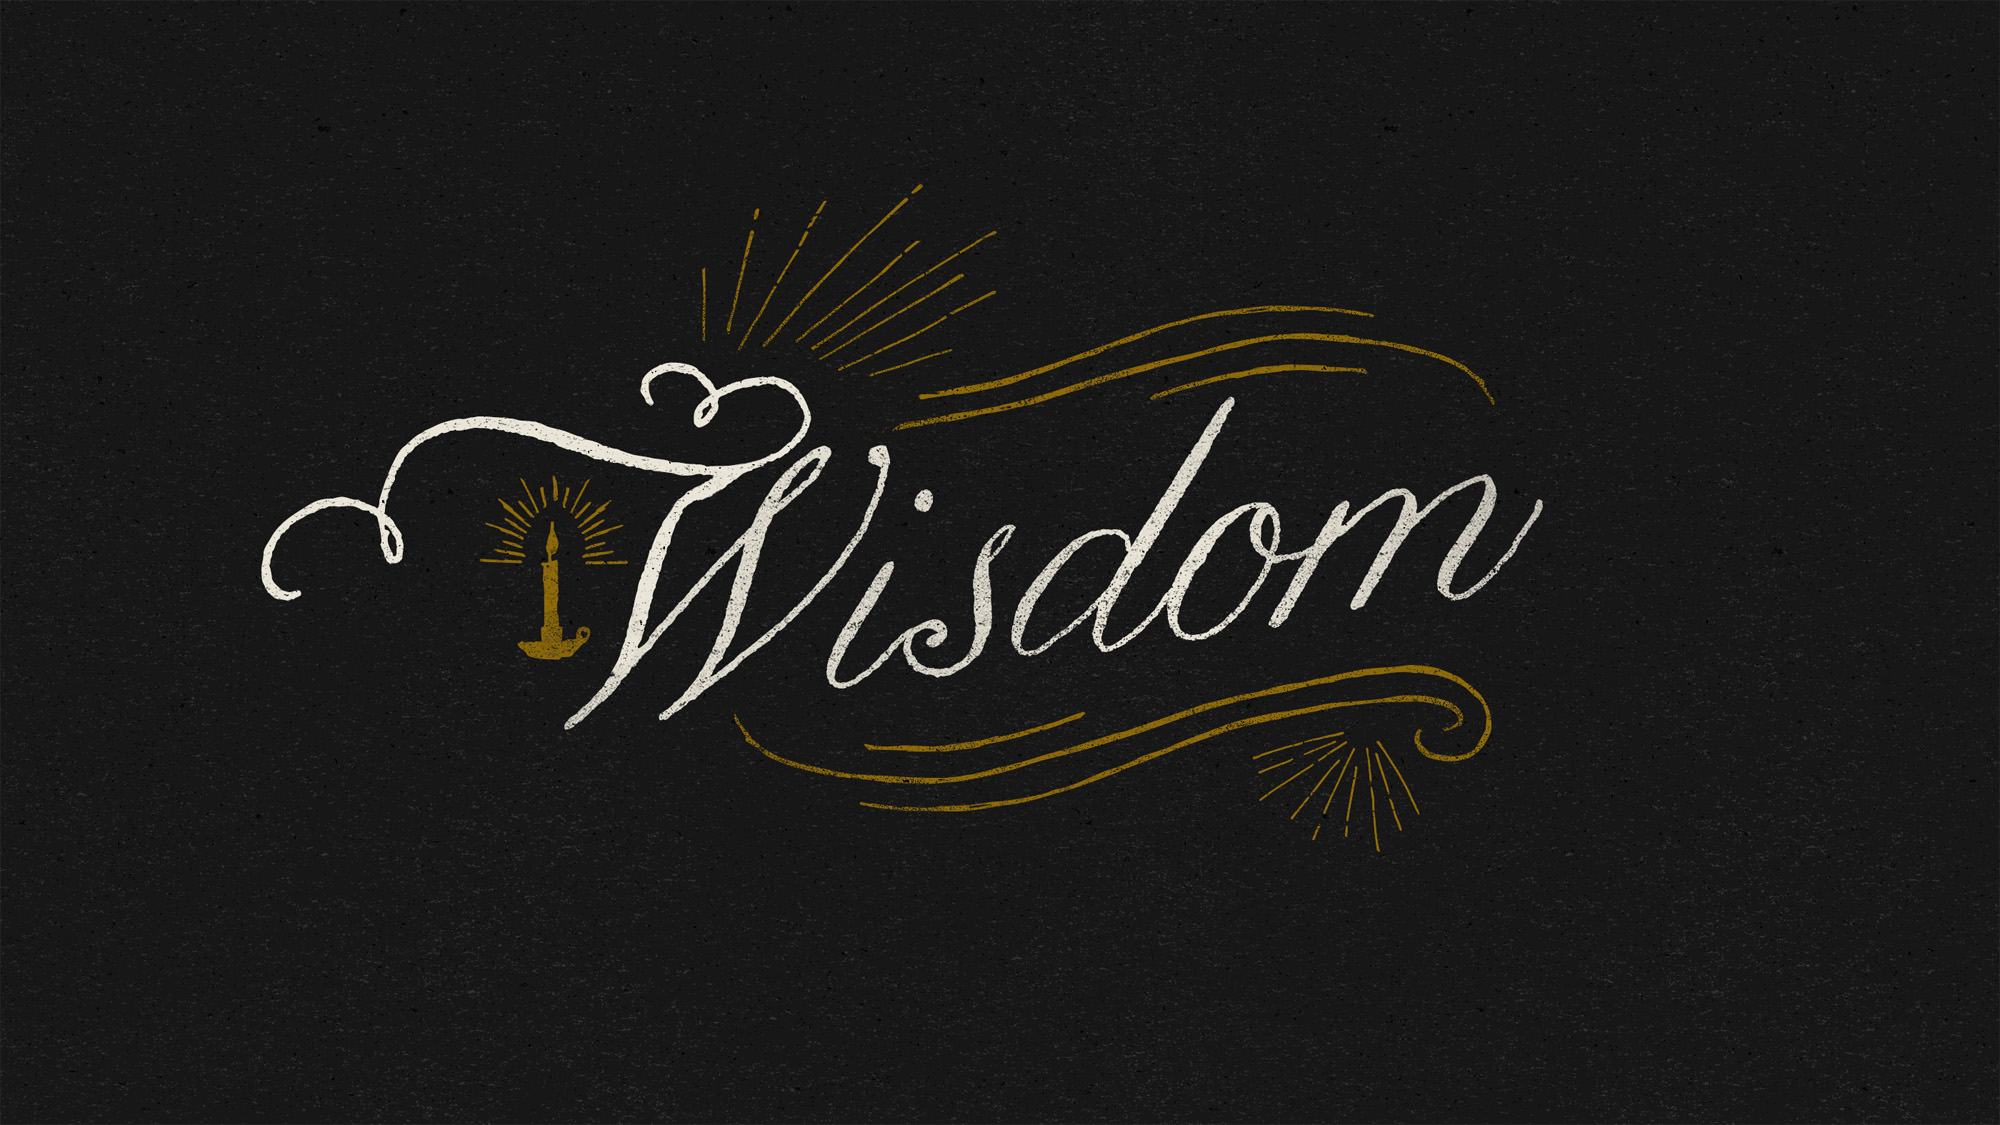 Wisdom: Christ